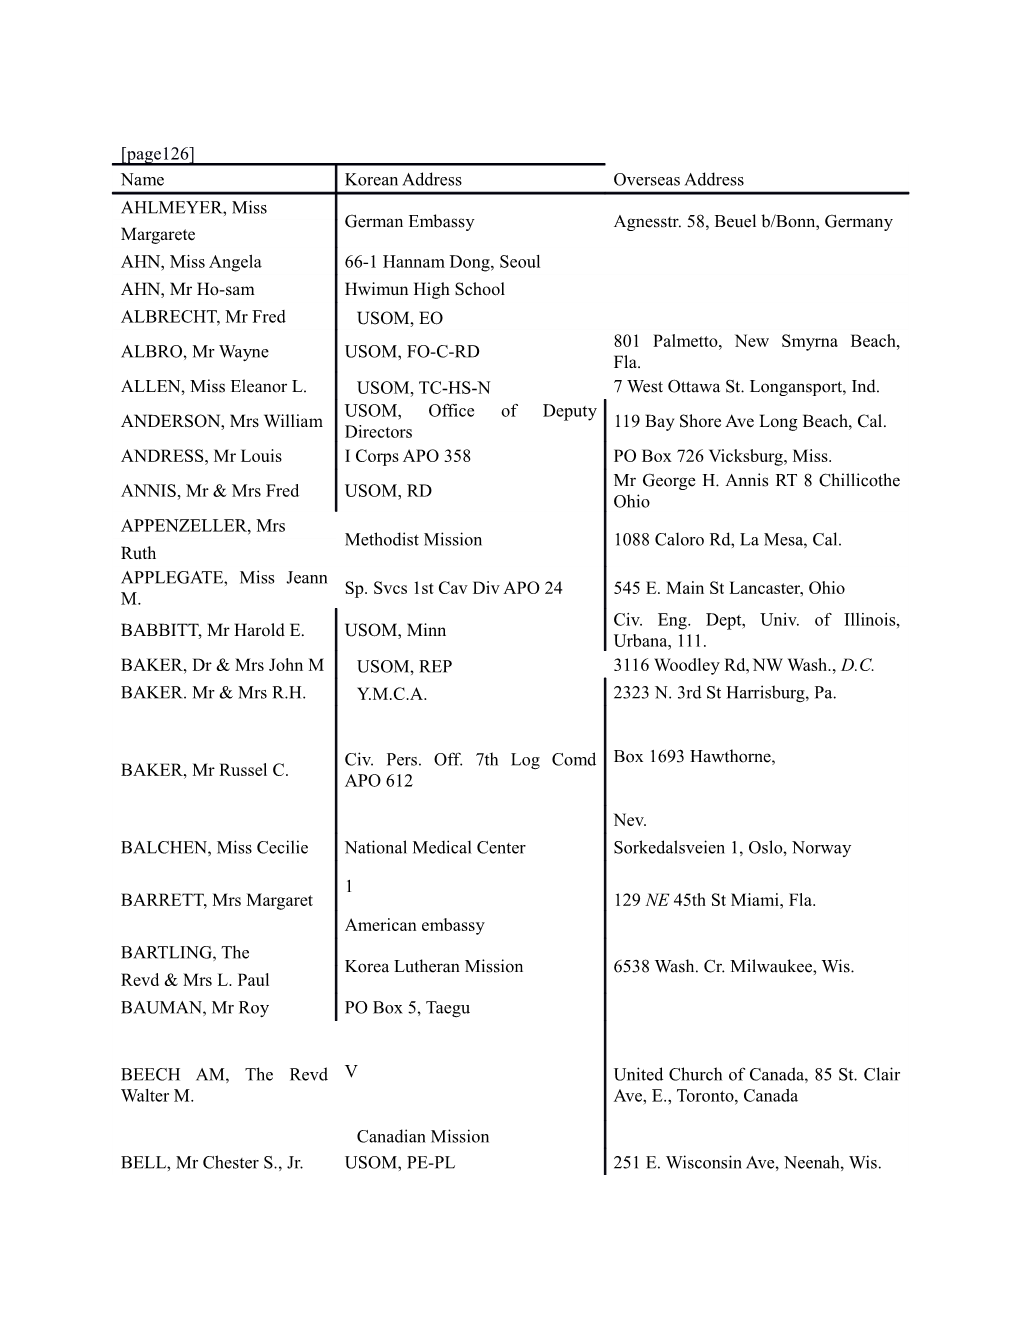 List of Members Royal Asiatic Society Korea Branch